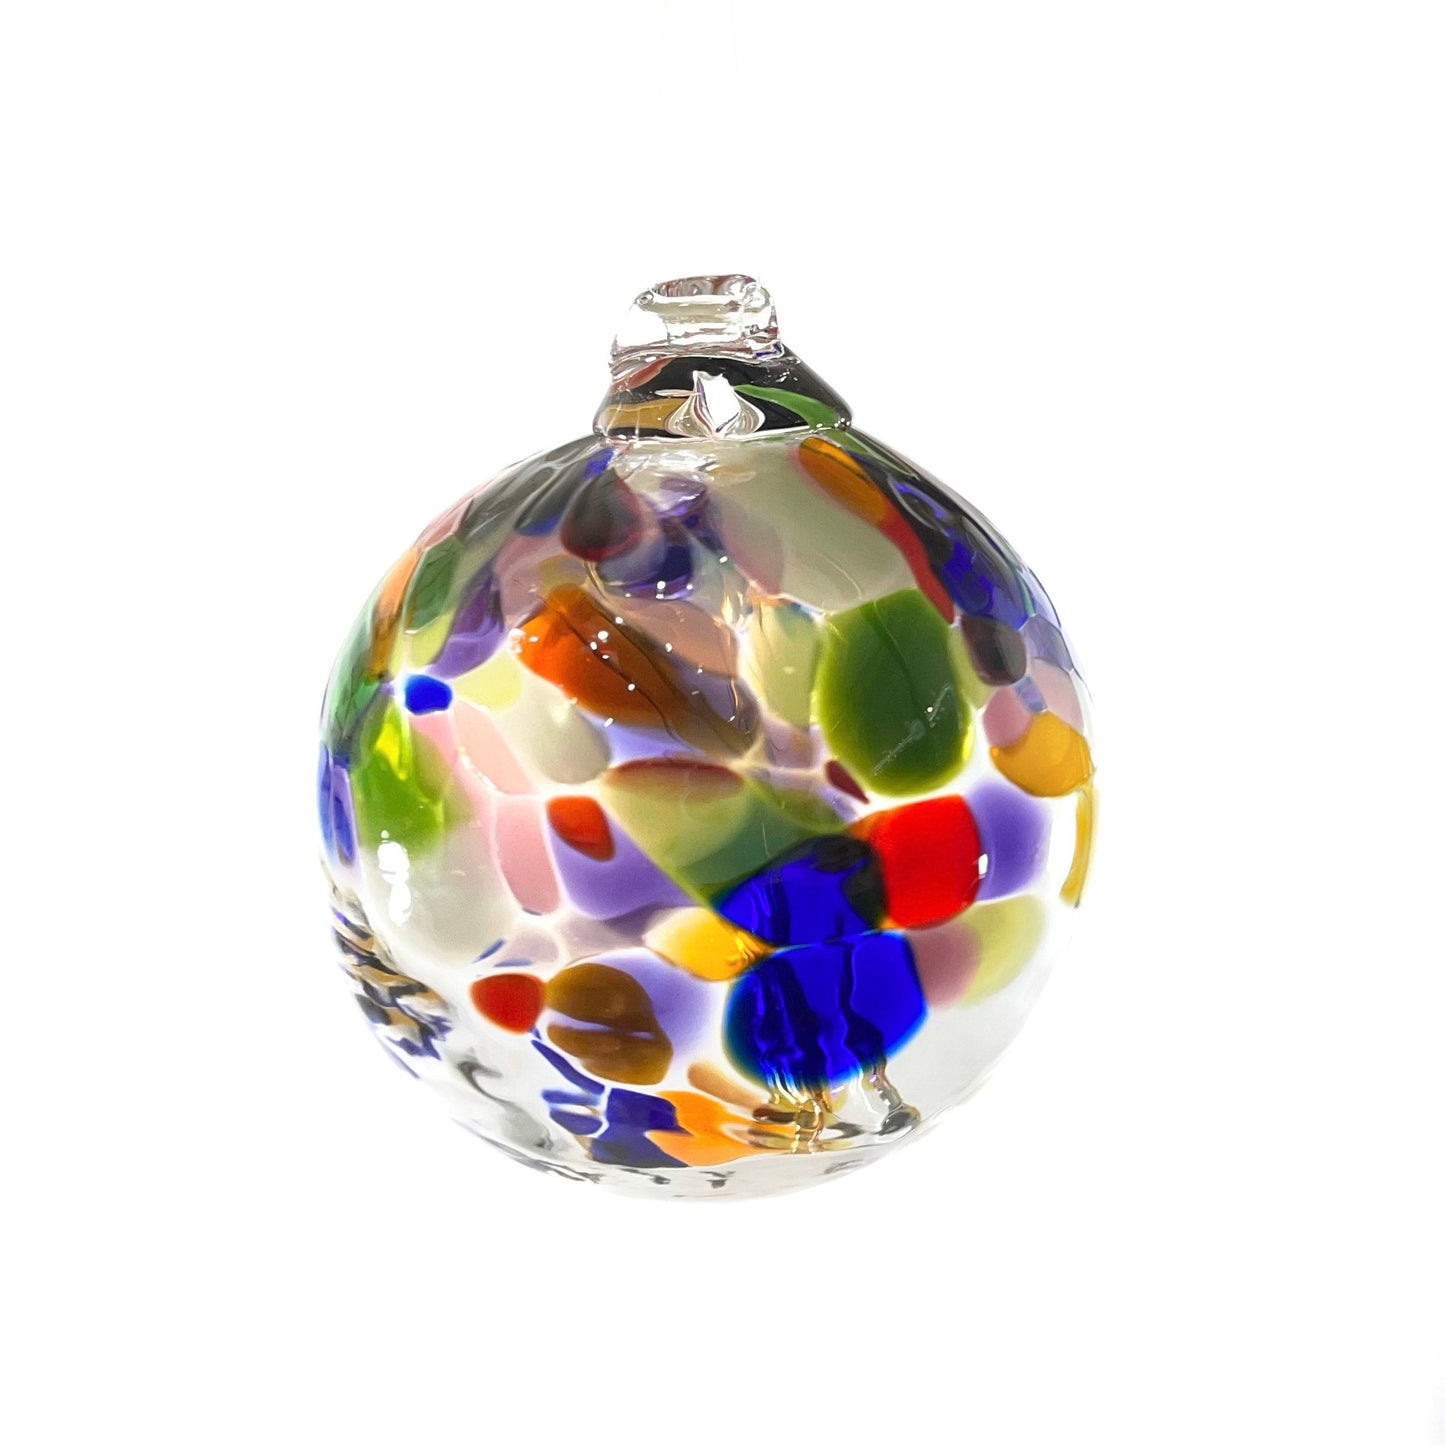 Handmade Glass Art 2” Globe Ornament - Tree of Adventure